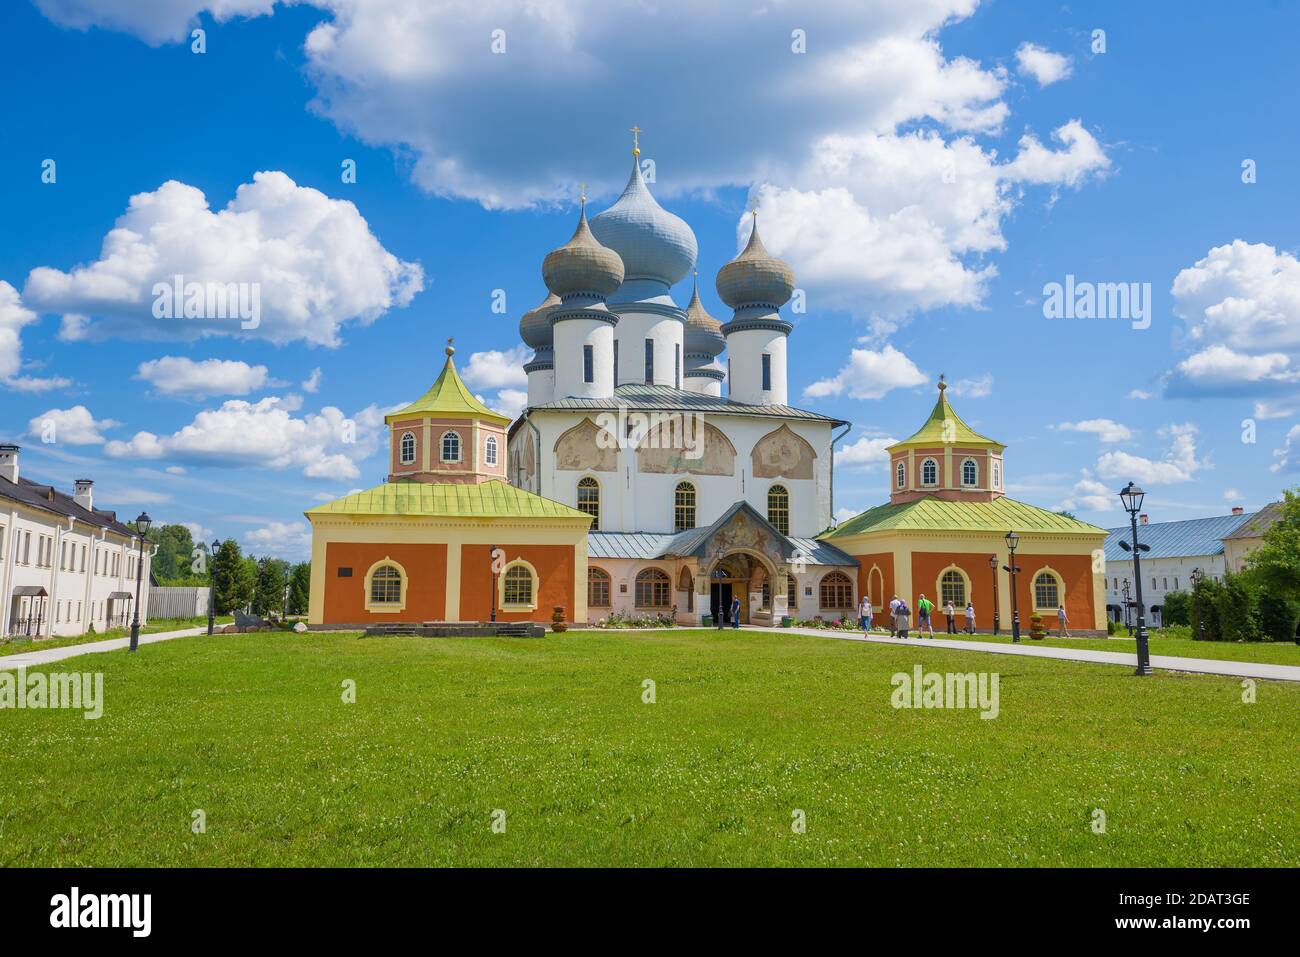 View of the ancient Uspensky Cathedral on a sunny July day. Tikhvin Bogorodichny Uspensky Monastery. Tikhvin, Russia Stock Photo